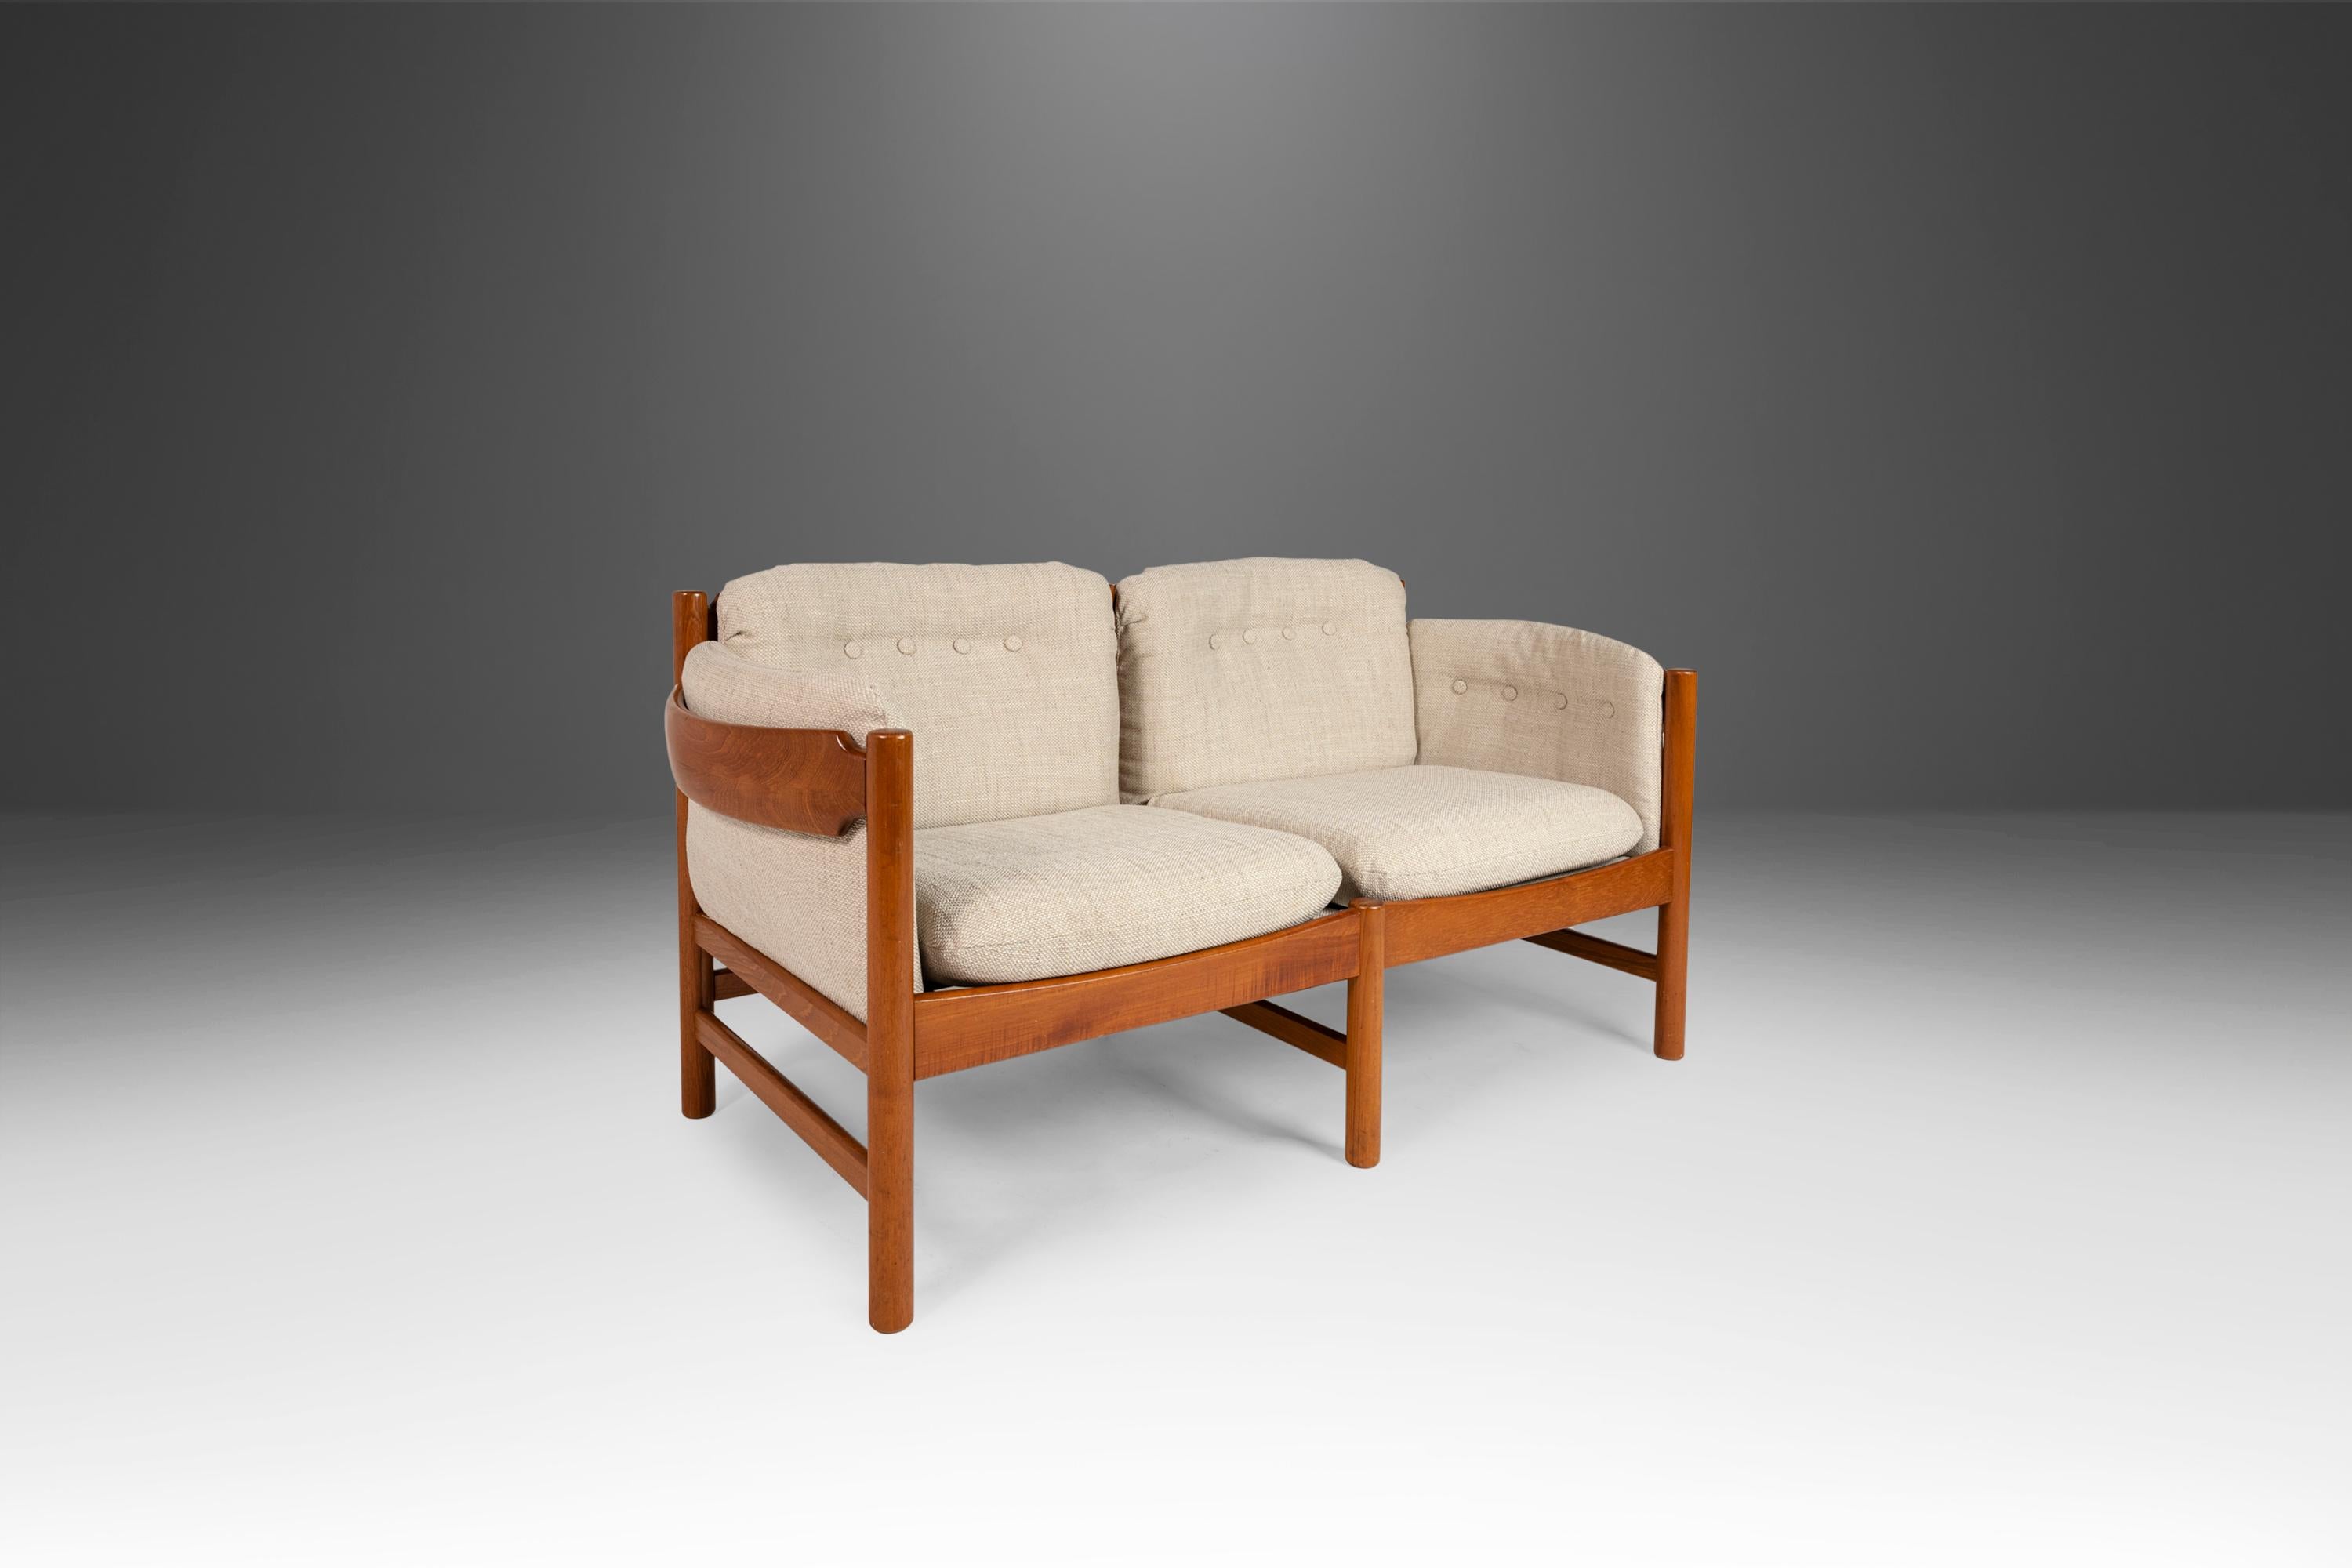 Scandinavian Modern Danish Modern Sofa / Loveseat by Jydsk Mobelvaerk in Teak and New Fabric, 1960's For Sale